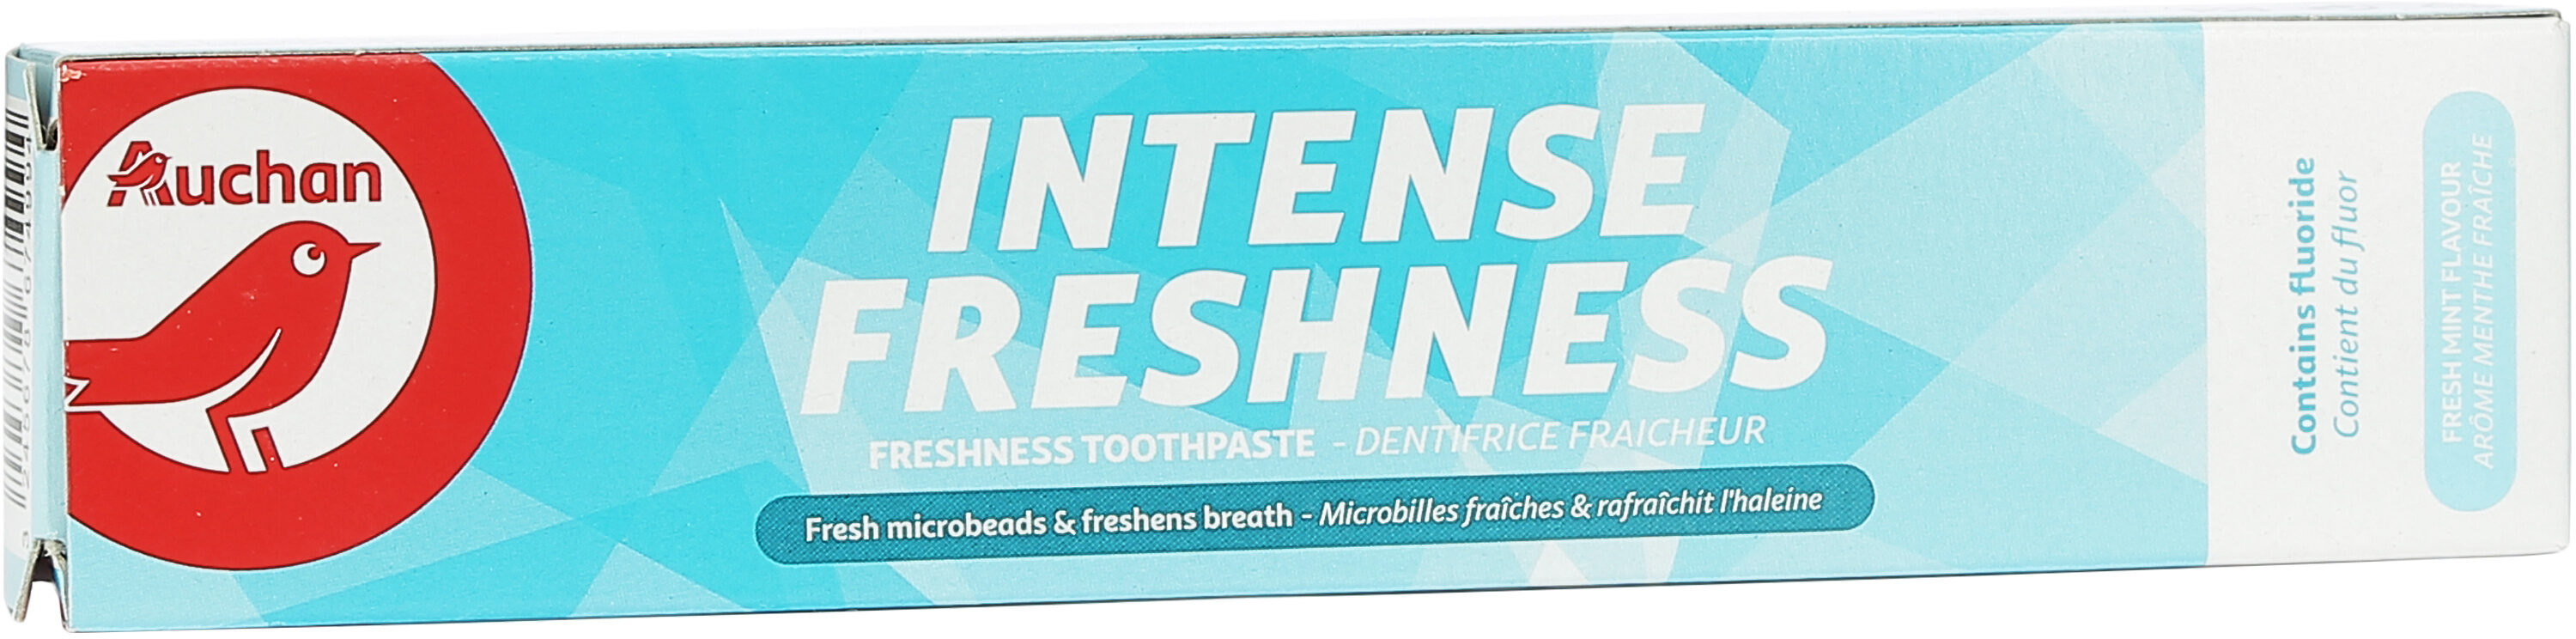 Auchan - dentifrice - fraicheur intense - 75ml - Produit - fr